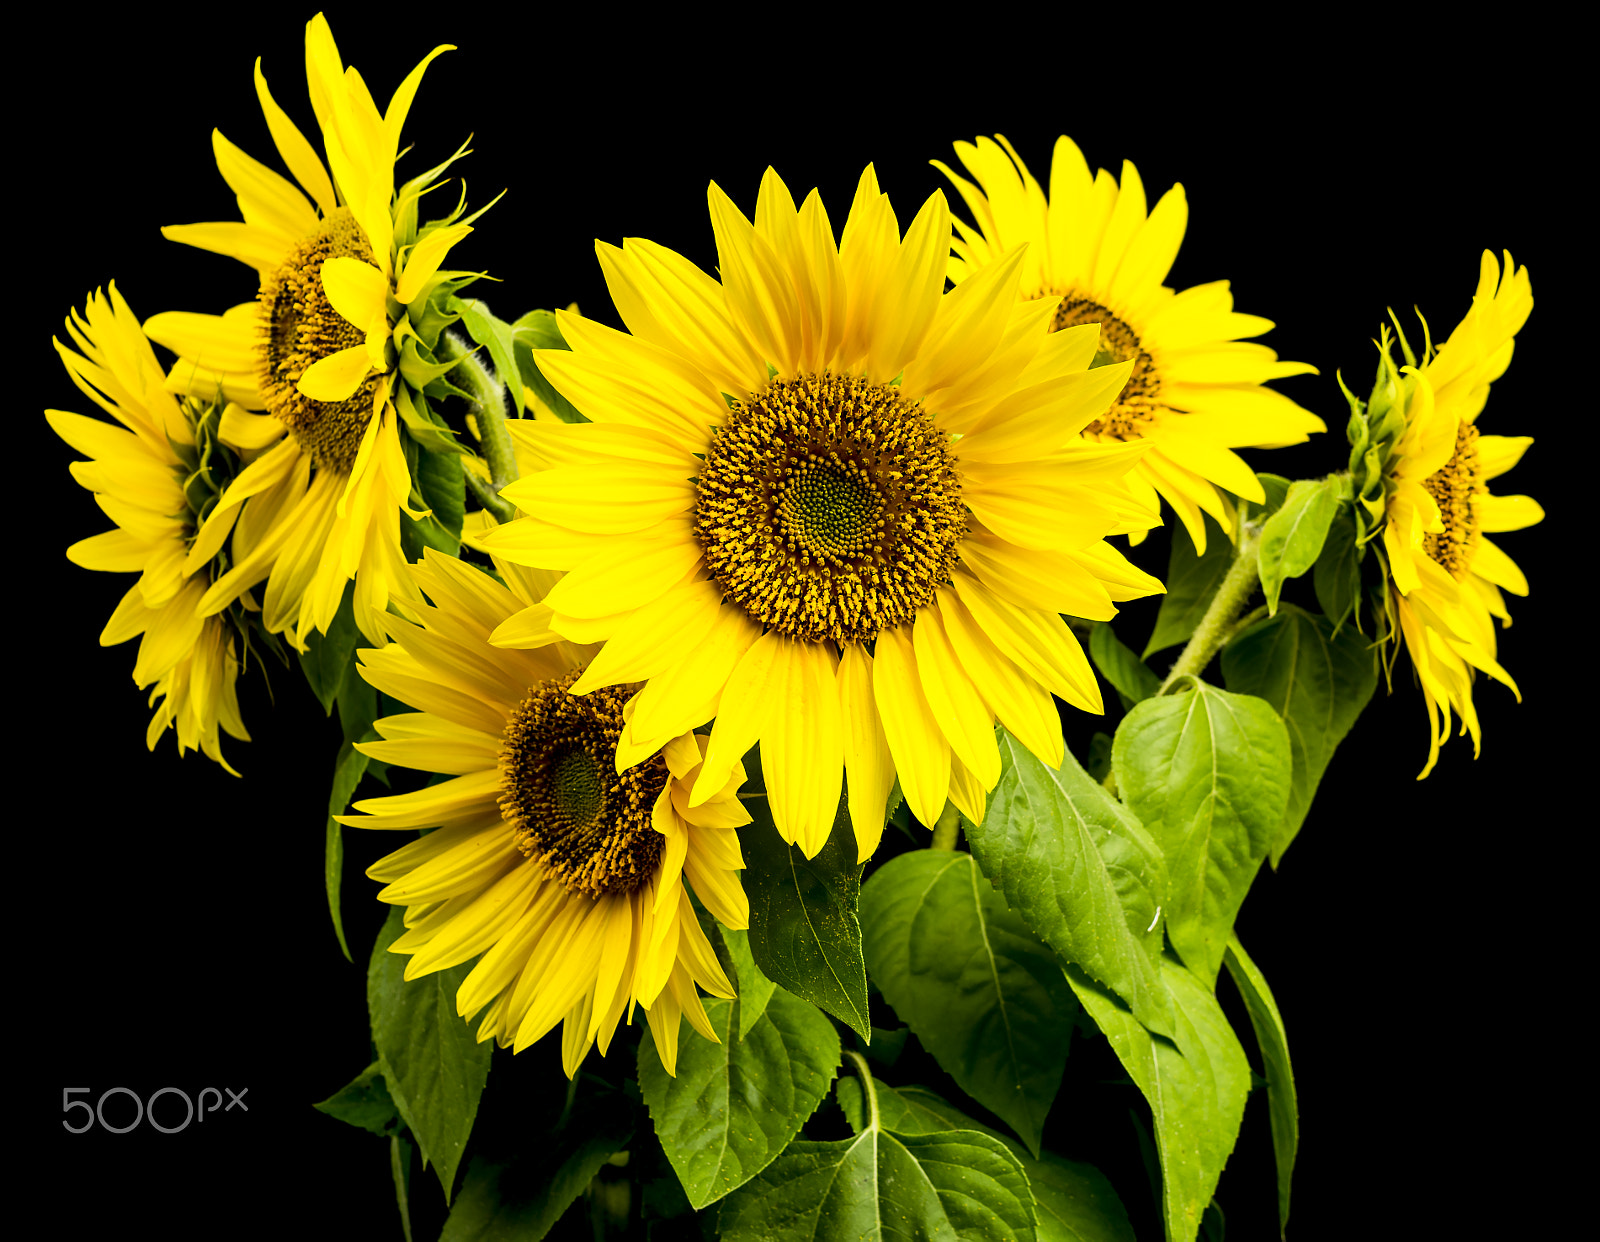 Pentax smc DA 35mm F2.8 Macro Limited sample photo. Sunflowers photography